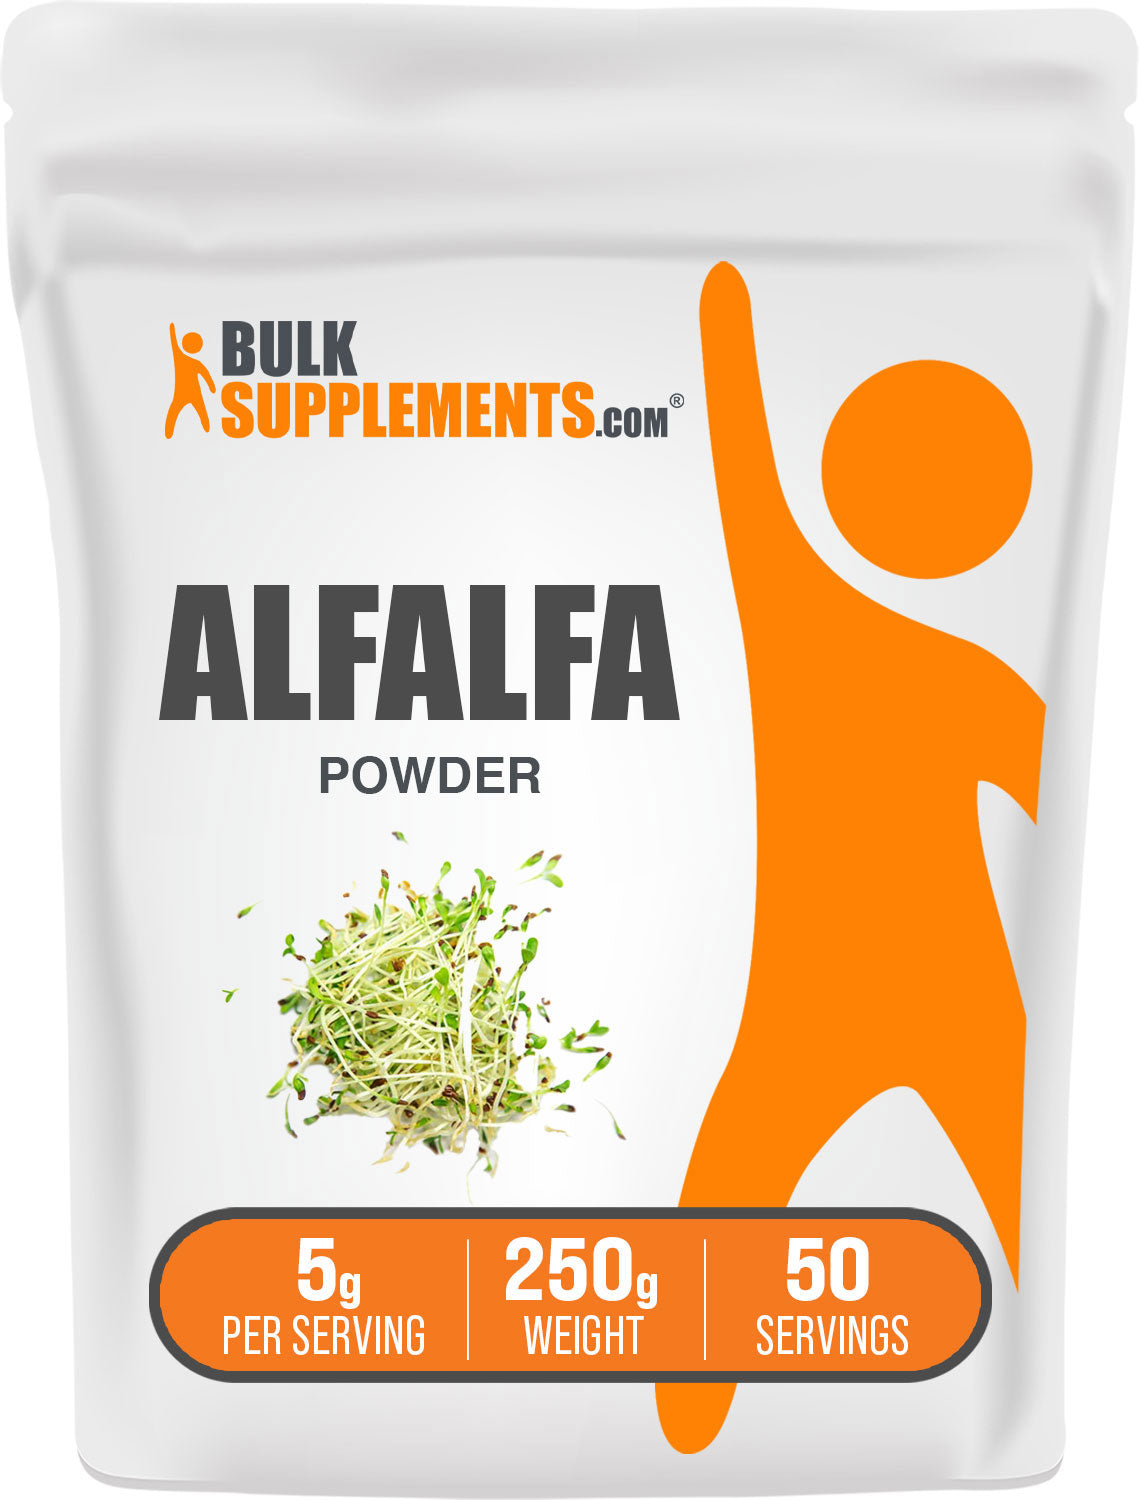 Alfalfa Powder 250g bag